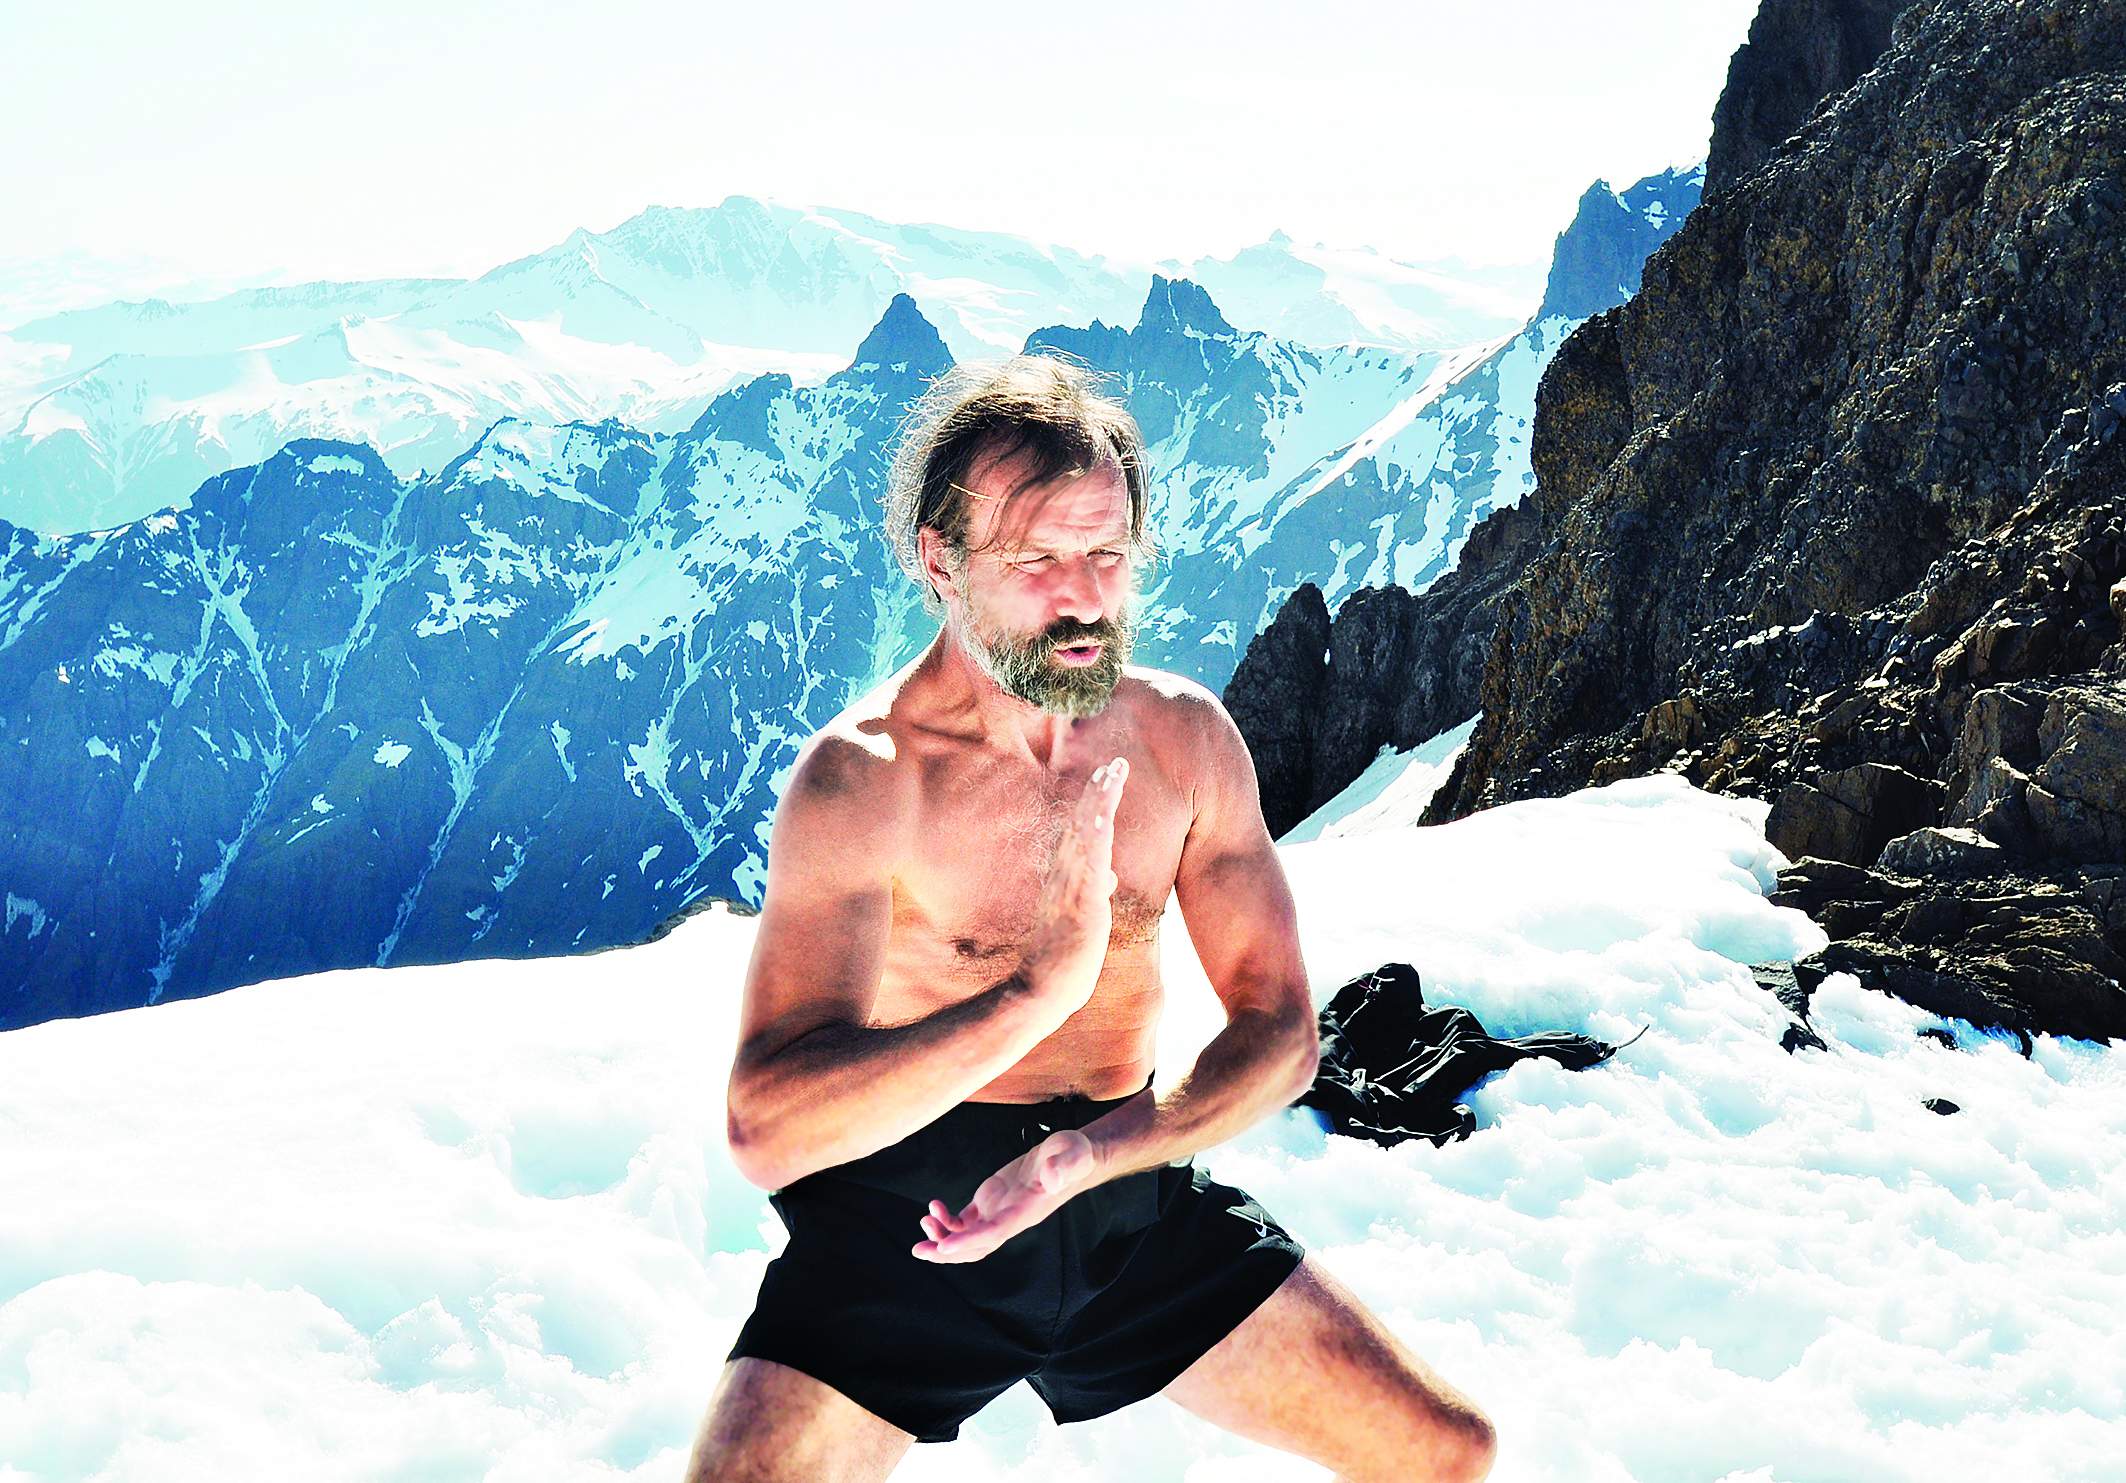 The Iceman, Wim Hof's Methods Come To Mount Pleasant